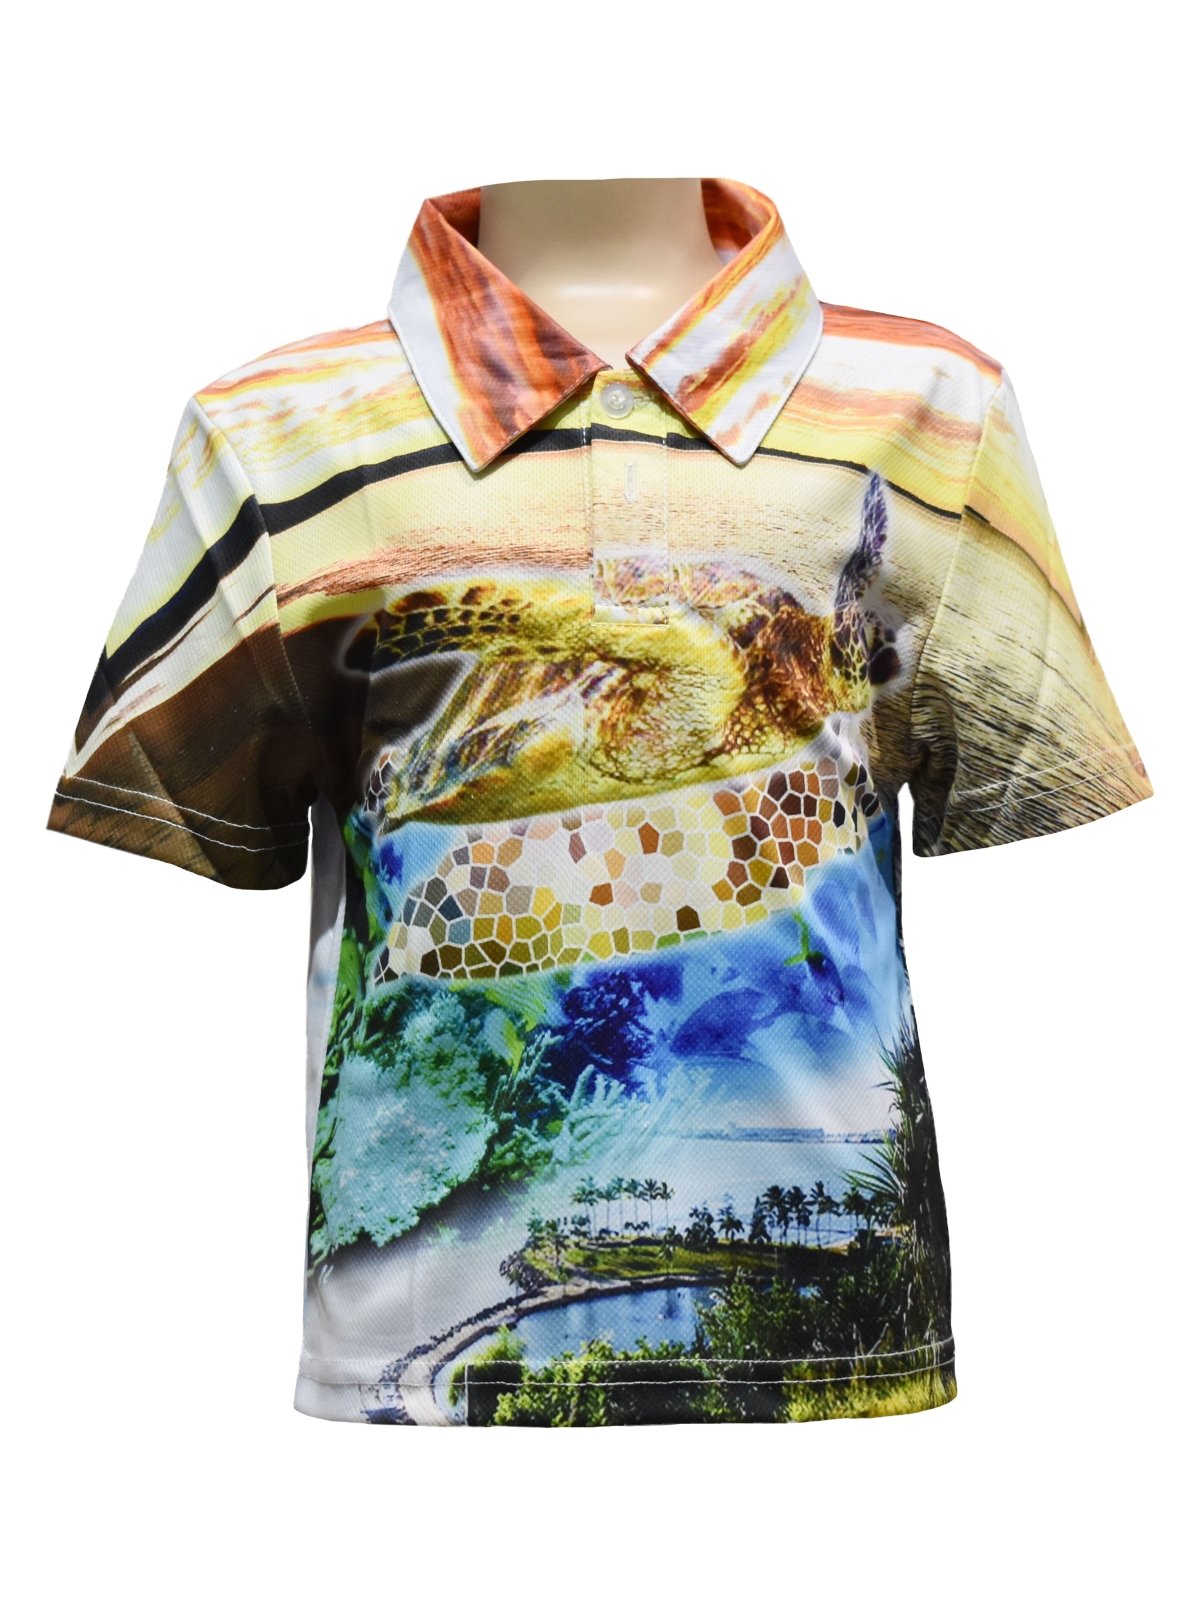 Fishing Shirt by LJMDesign